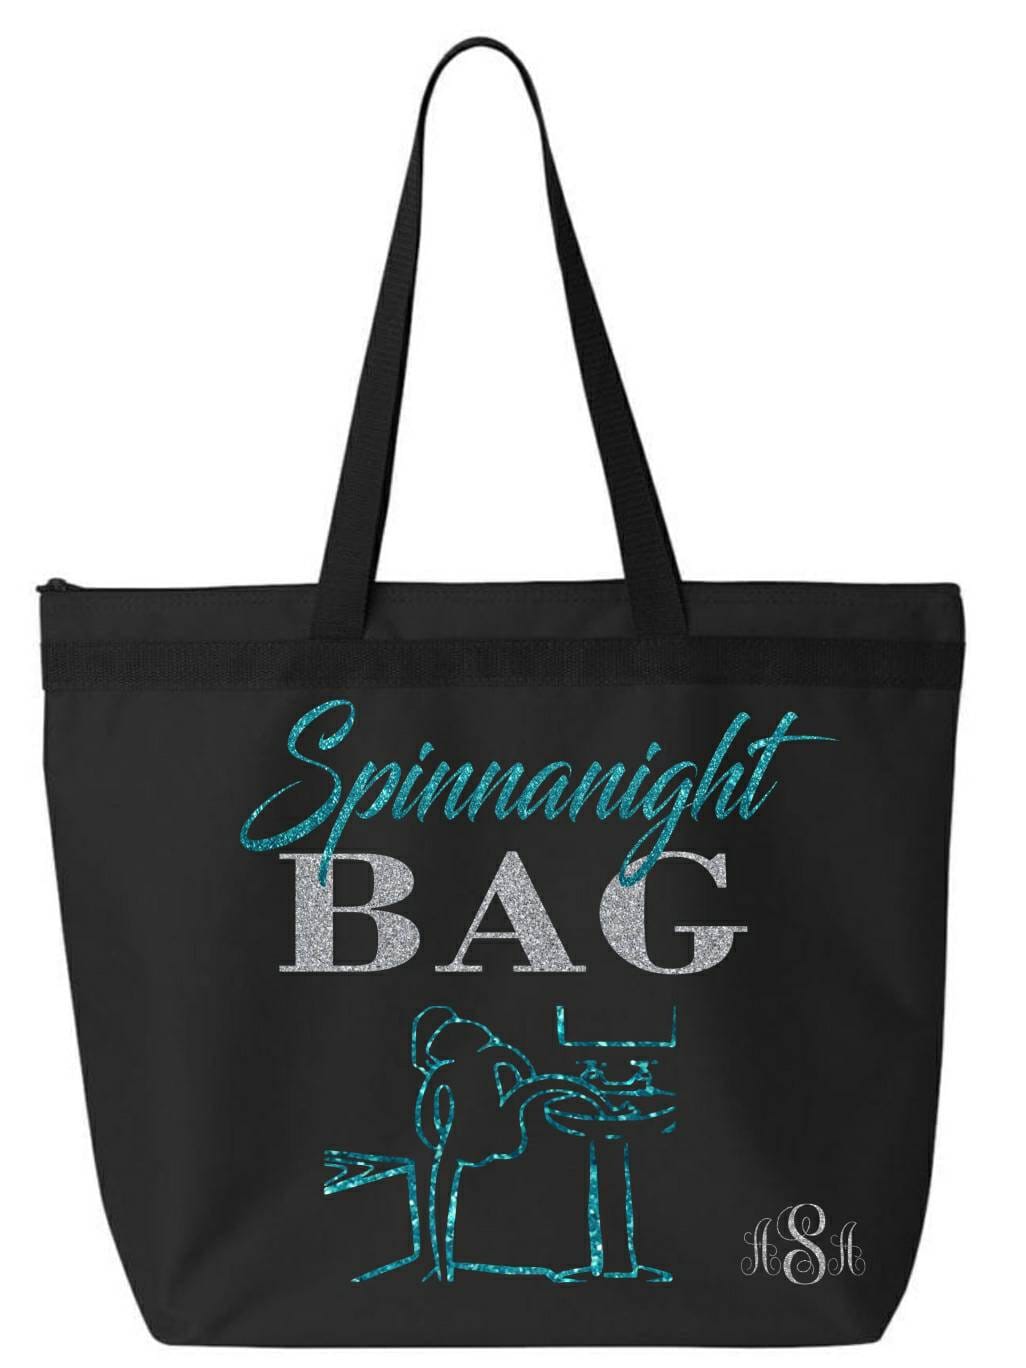 Spend the Night Bag Kit 